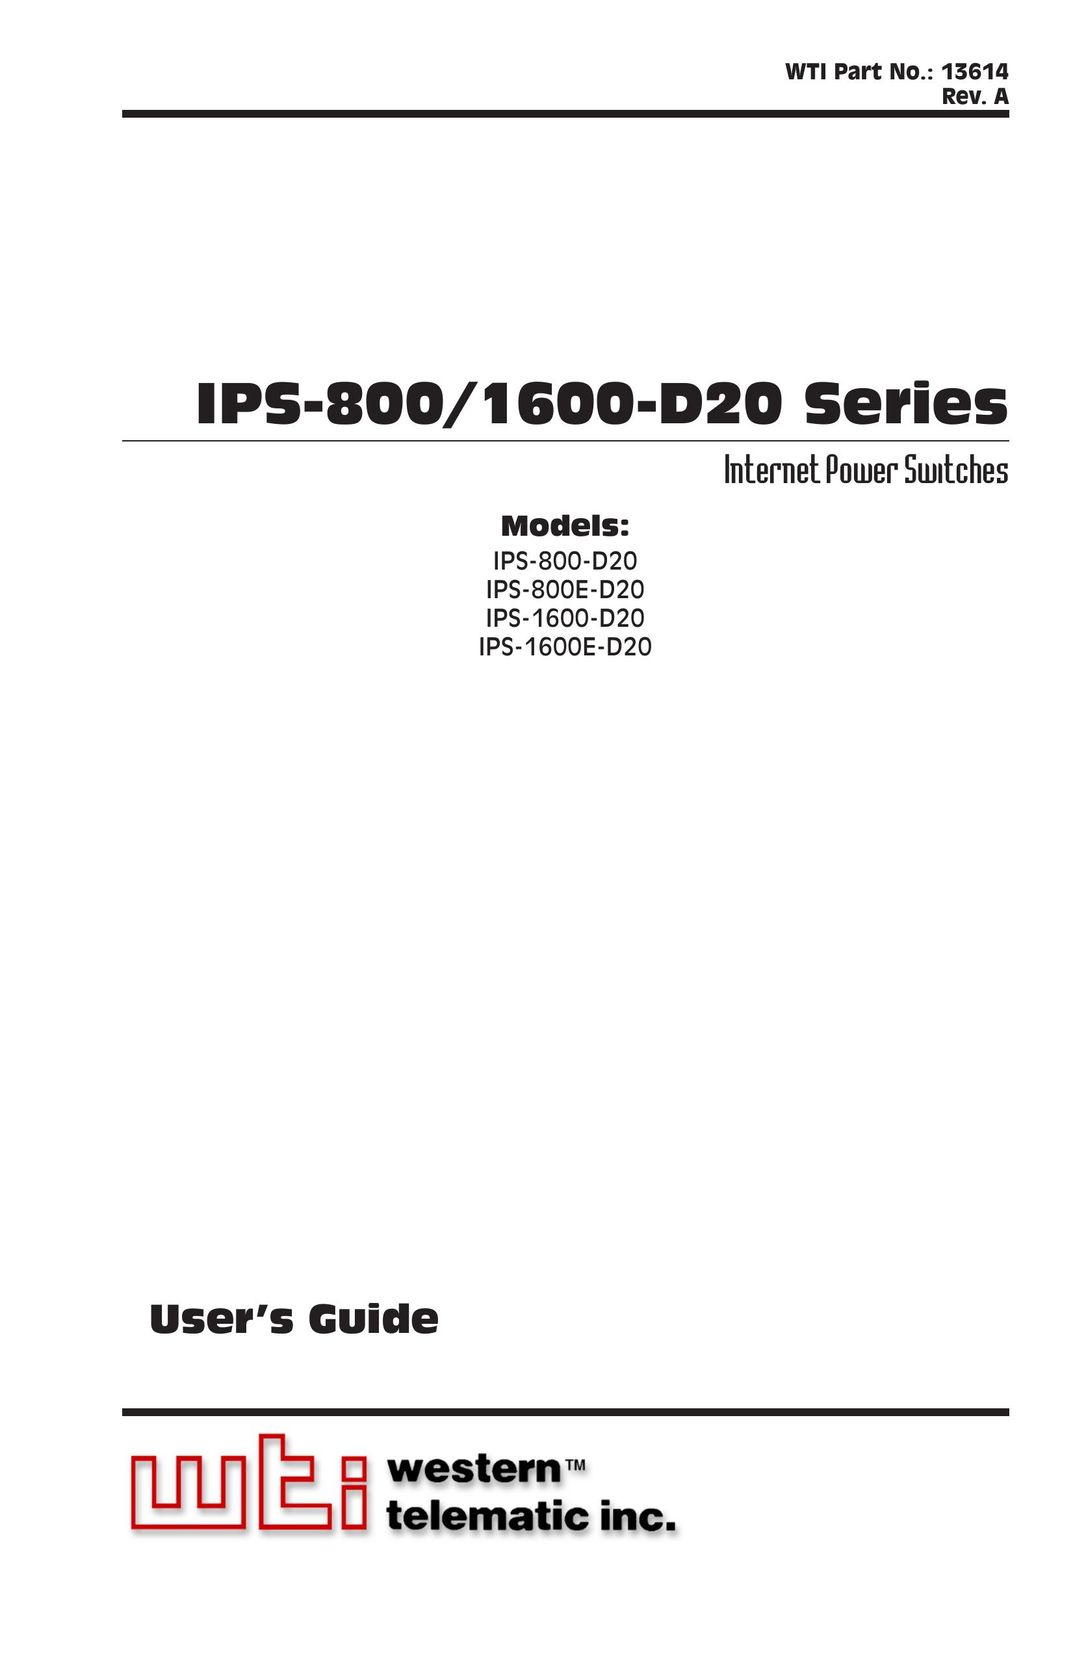 Western Telematic IPS-800-D20, IPS-800E-D20, IPS-1600-D20, IPS-1600E-D20 Switch User Manual